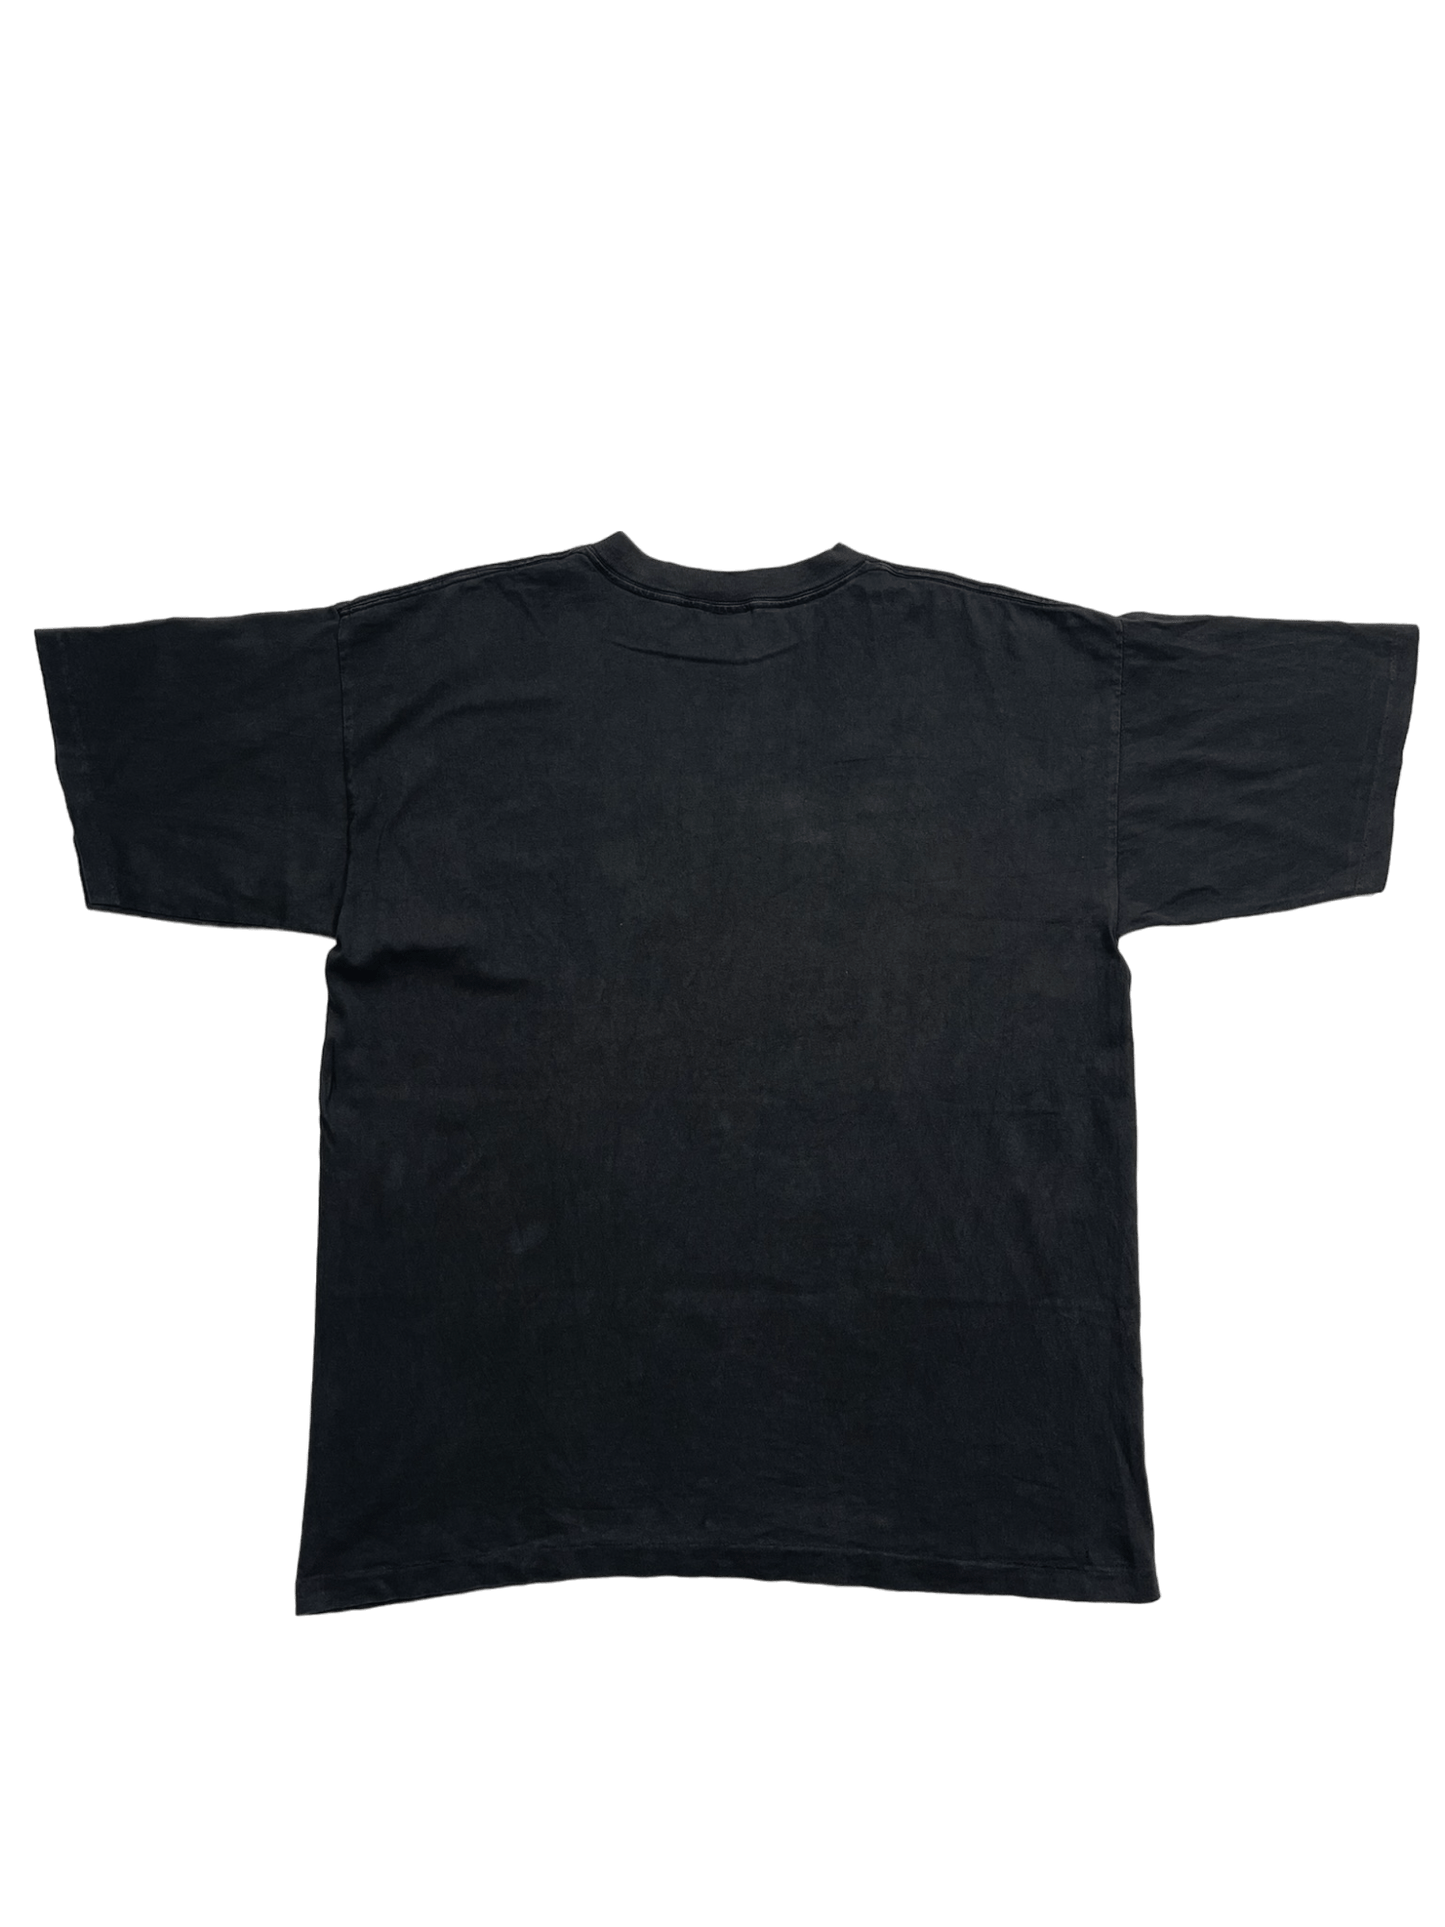 The Vintage Racks T-Shirt Large Brickyard 400 - L